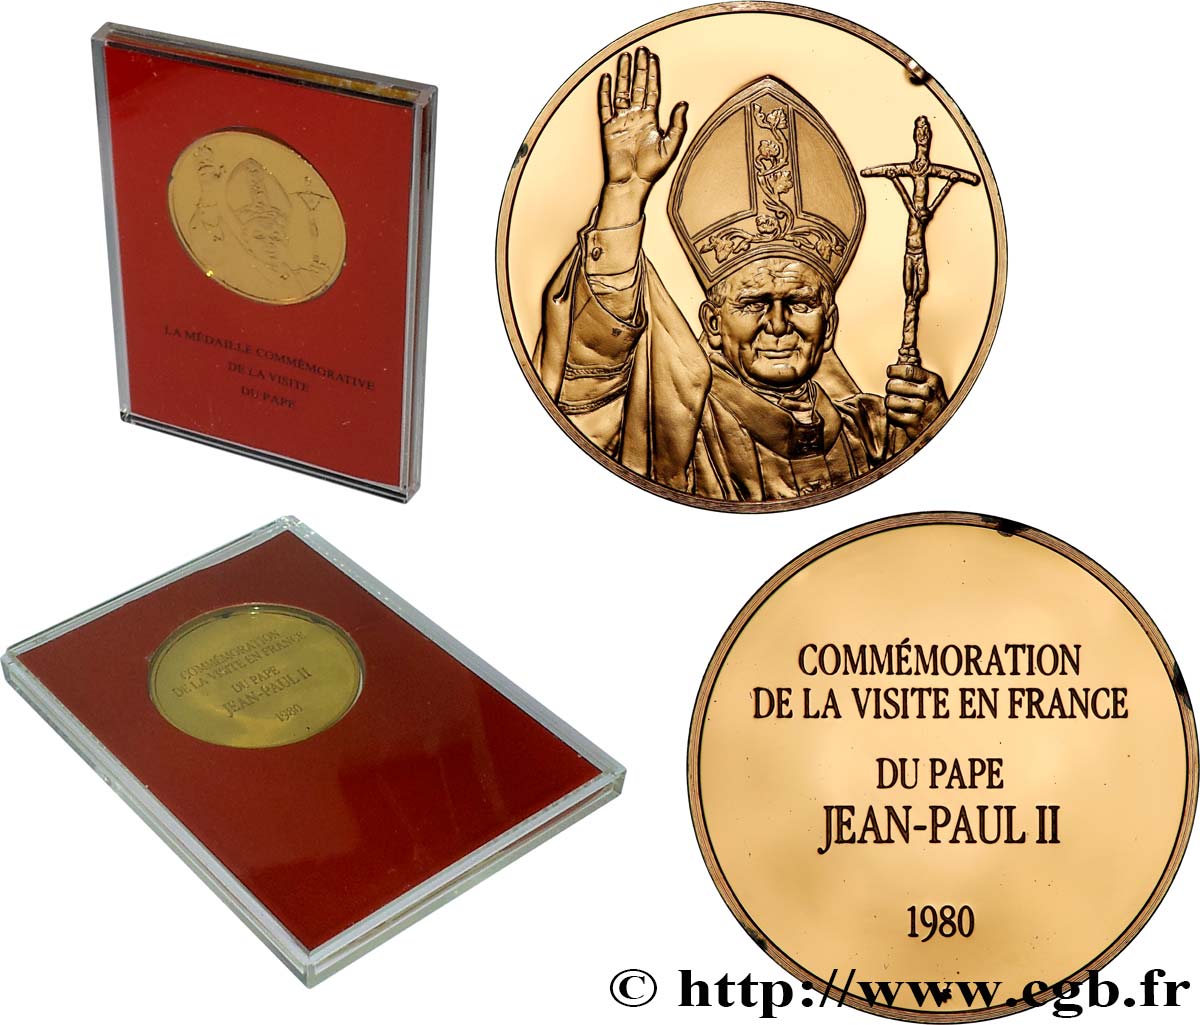 JOHN-PAUL II (Karol Wojtyla) Médaille, Commémoration de la visite du Pape Jean-Paul II en France MS